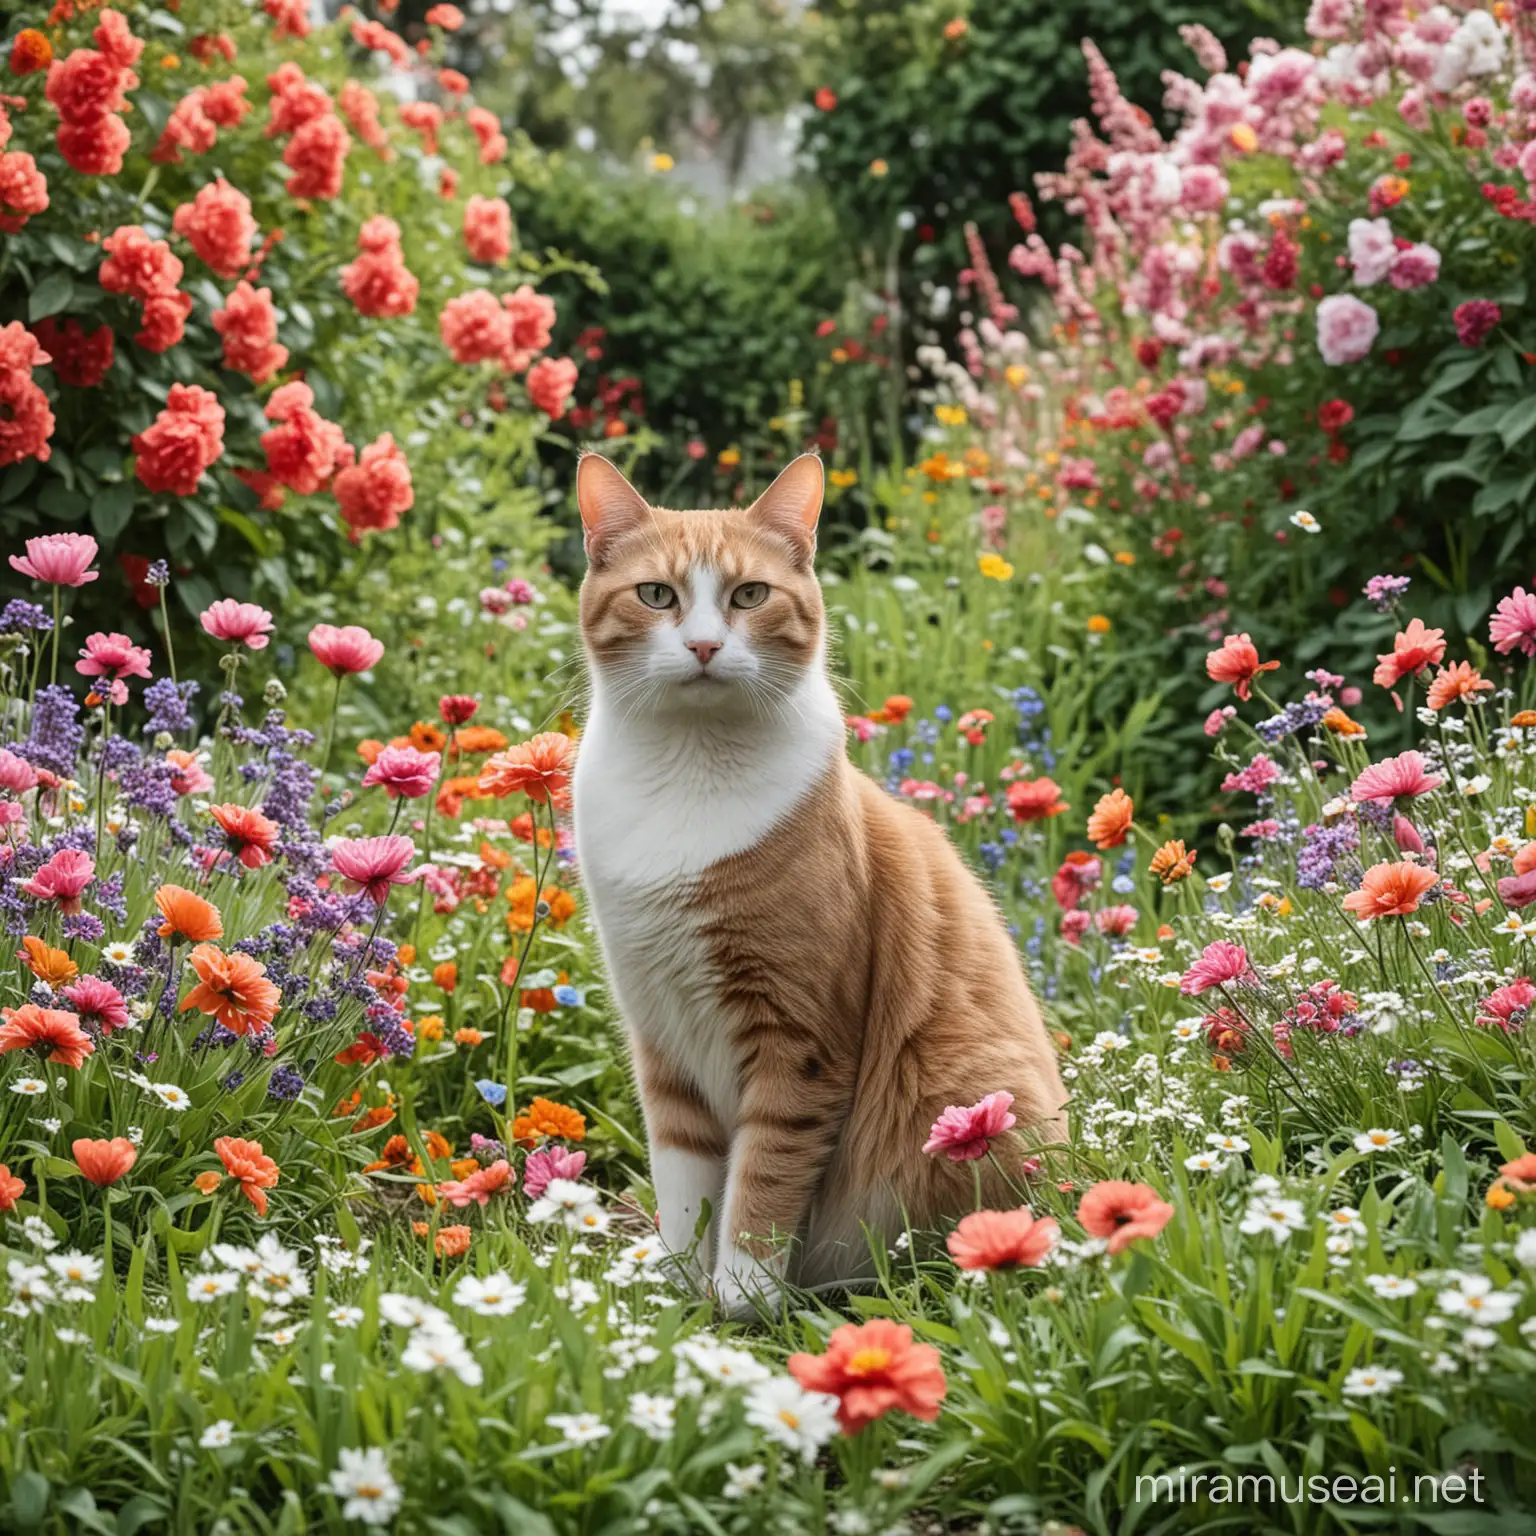 A CAT IN A GARDEN FULL OF FLOWERS